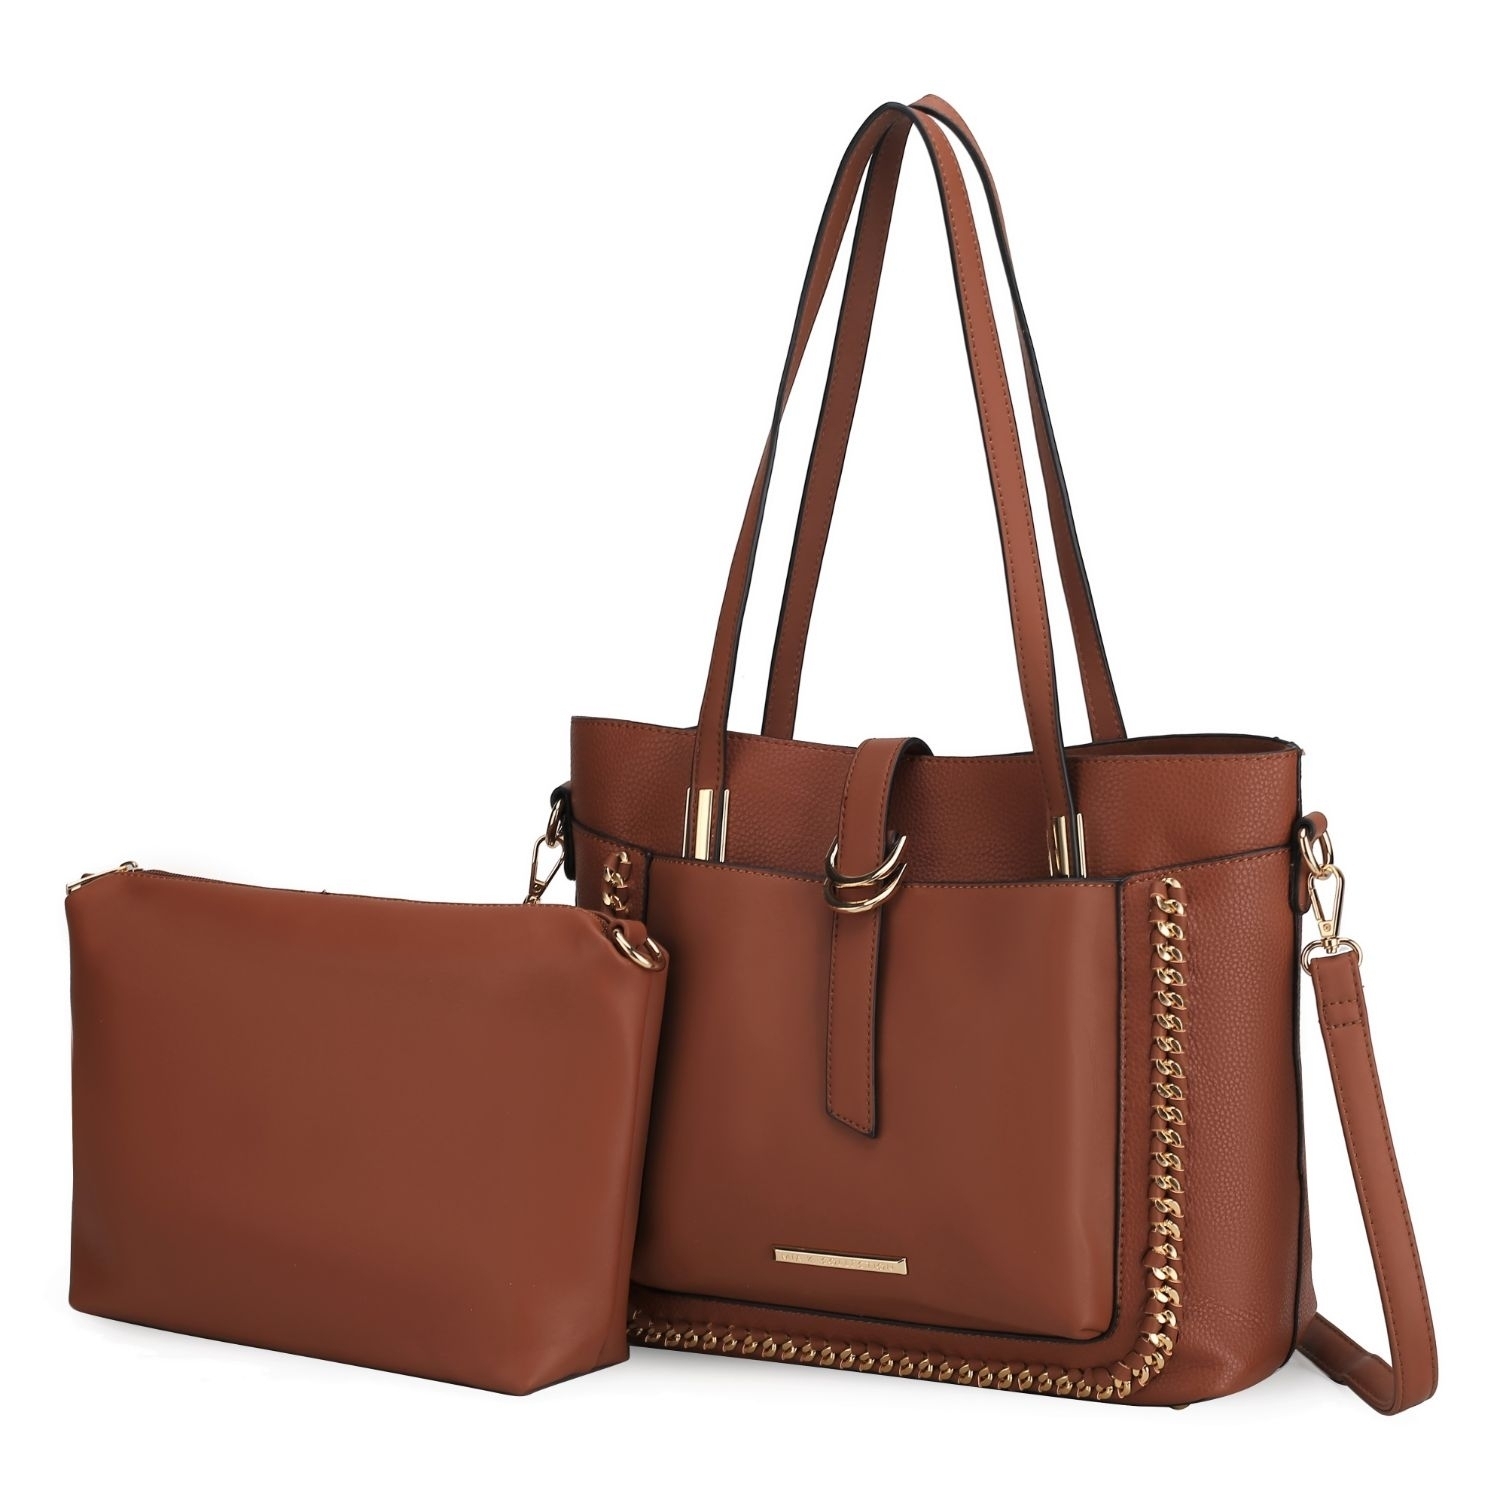 MKF Collection Raya Shoulder Handbag For Women's Vegan Leather Large With Crossbody Pouch Handbag By Mia K - Light Grey